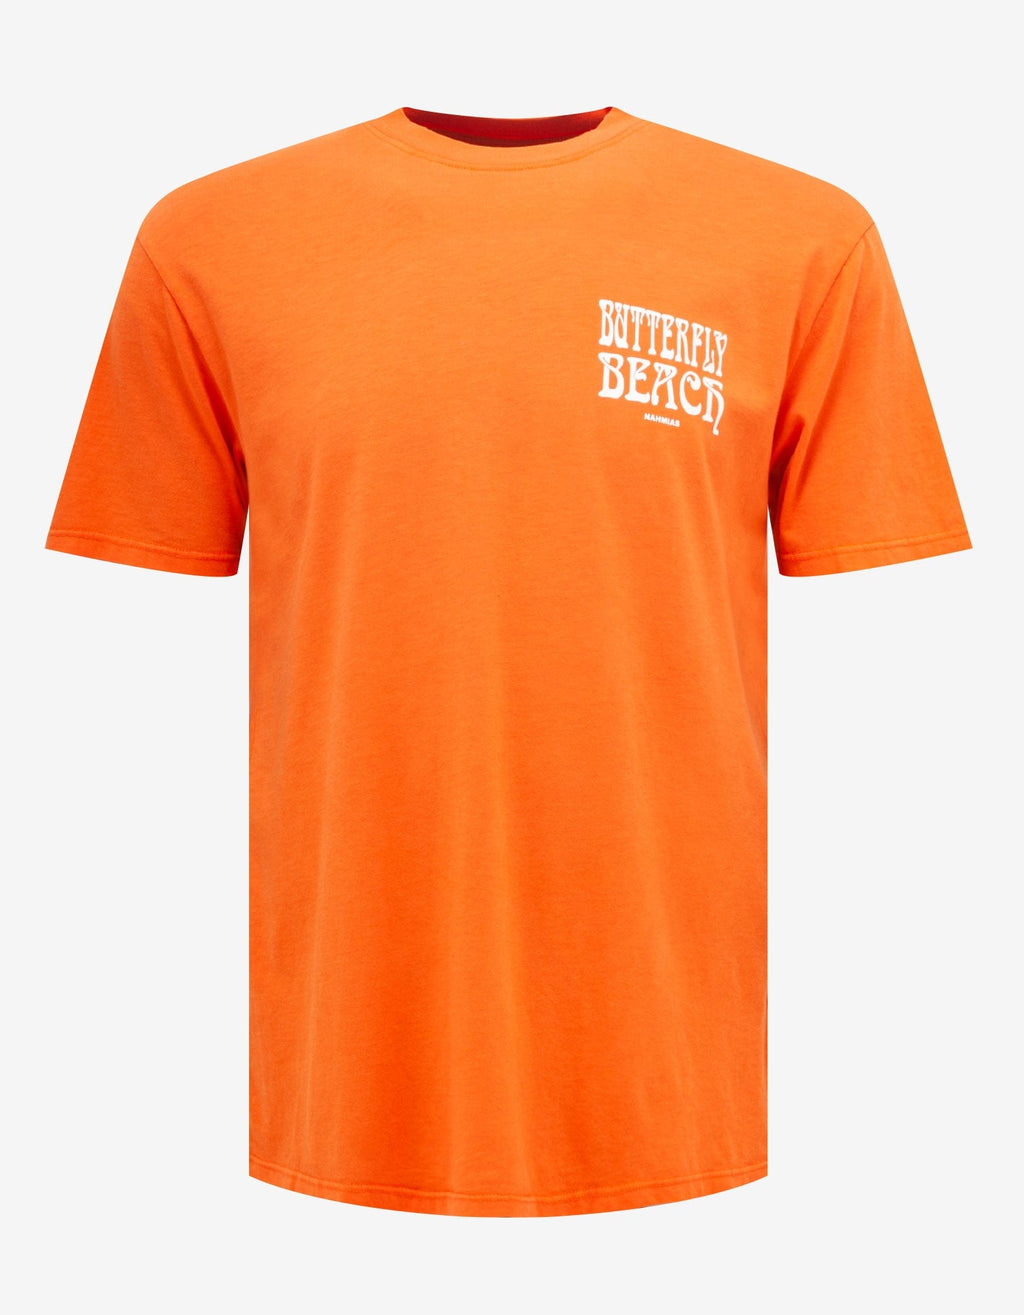 Nahmias Nahmias Orange Butterfly Beach T-Shirt